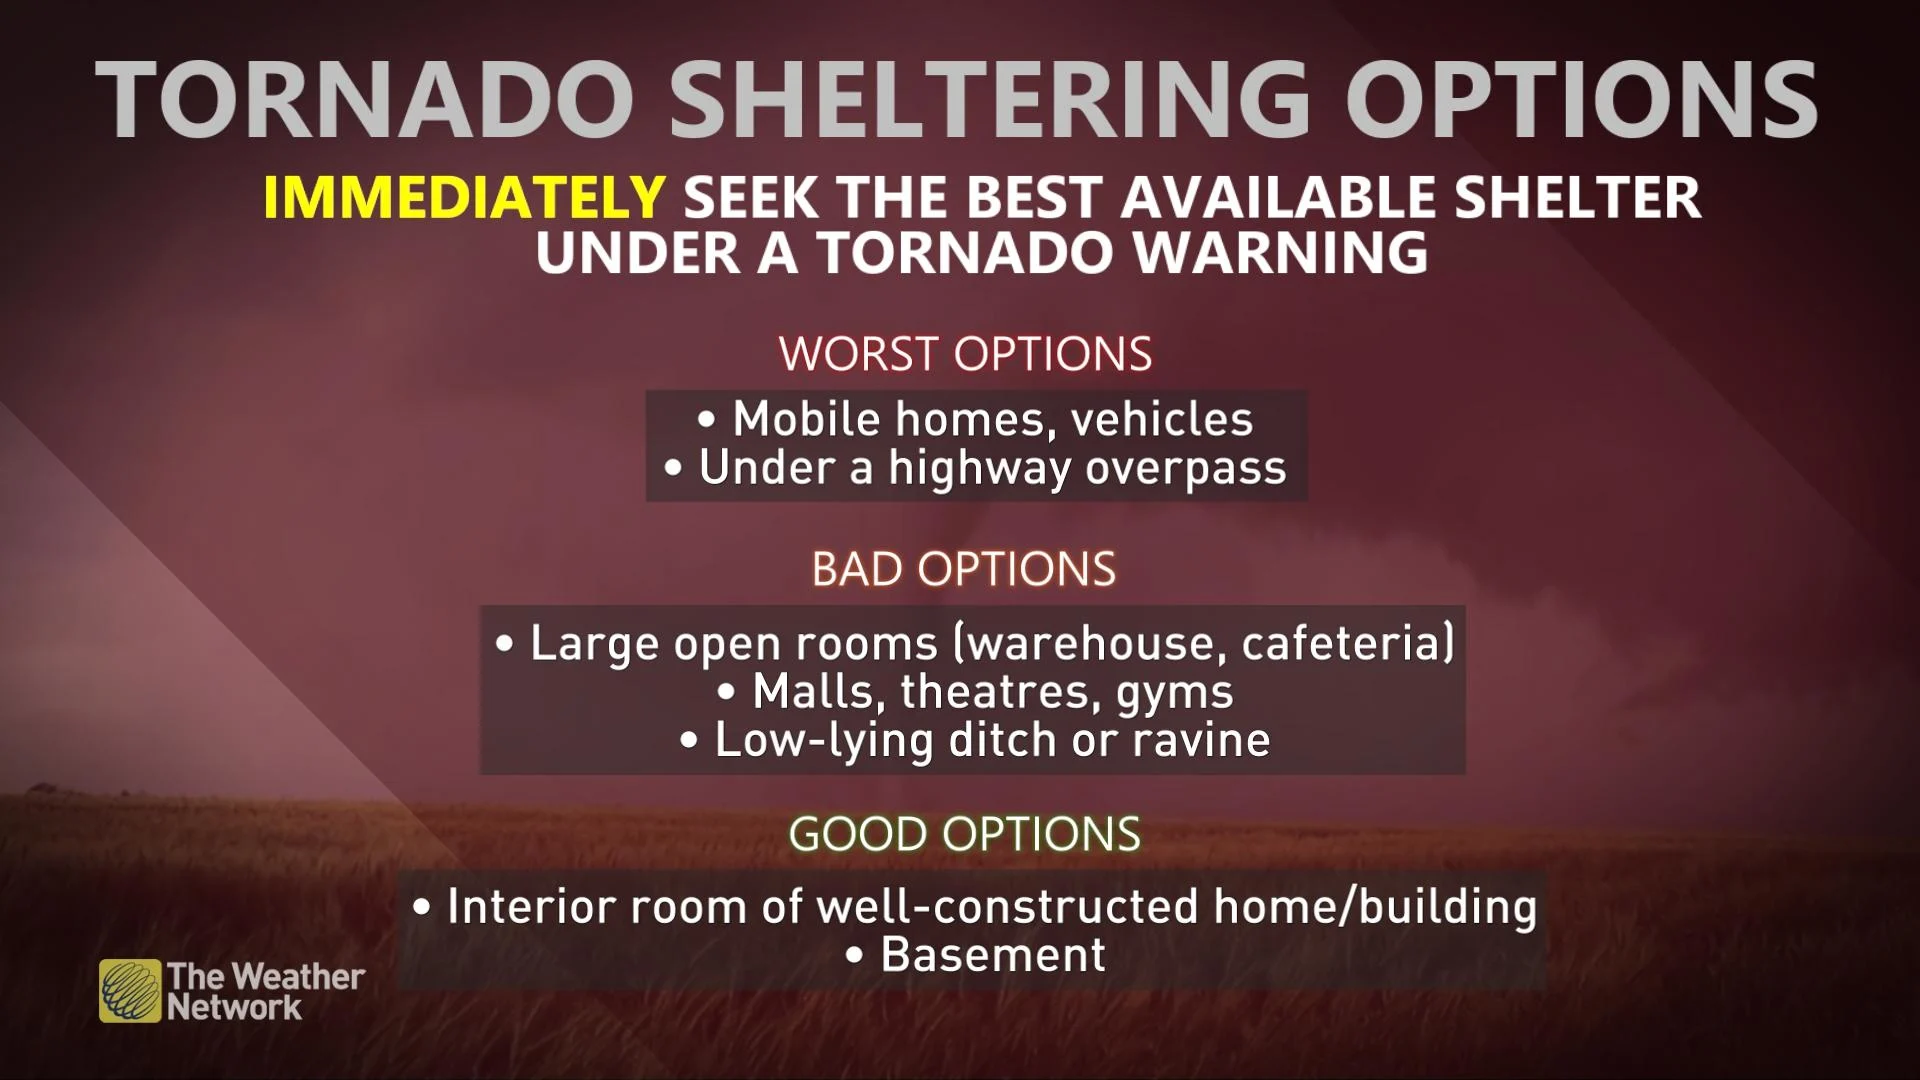 Tornado Shelter Explainer: What to do in case of tornado warning